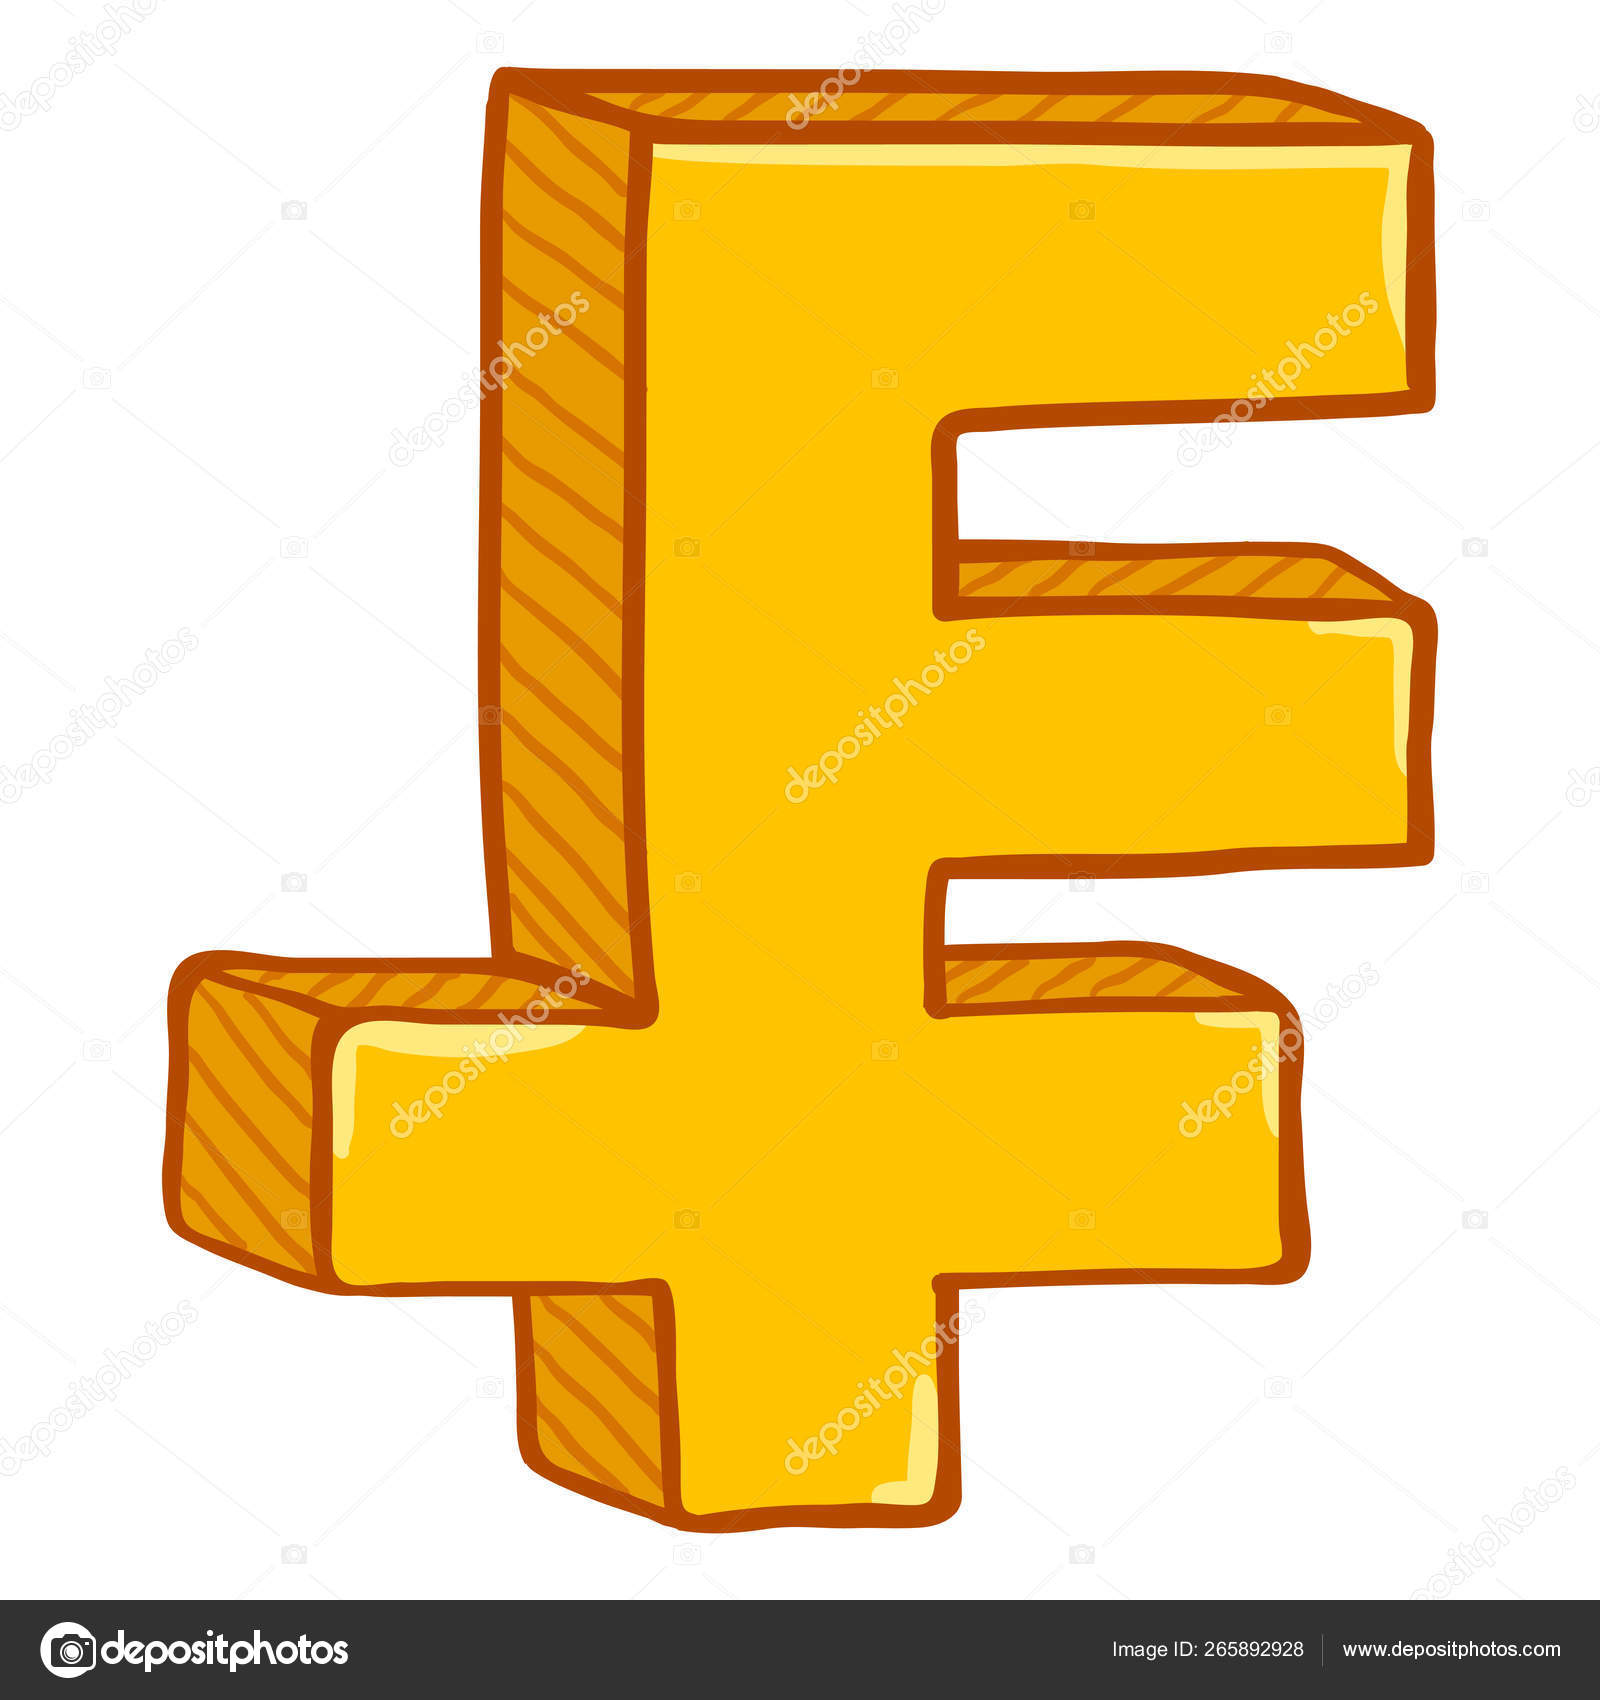 vector-cartoon-gold-switzerland-currency-symbol-swiss-franc-sign